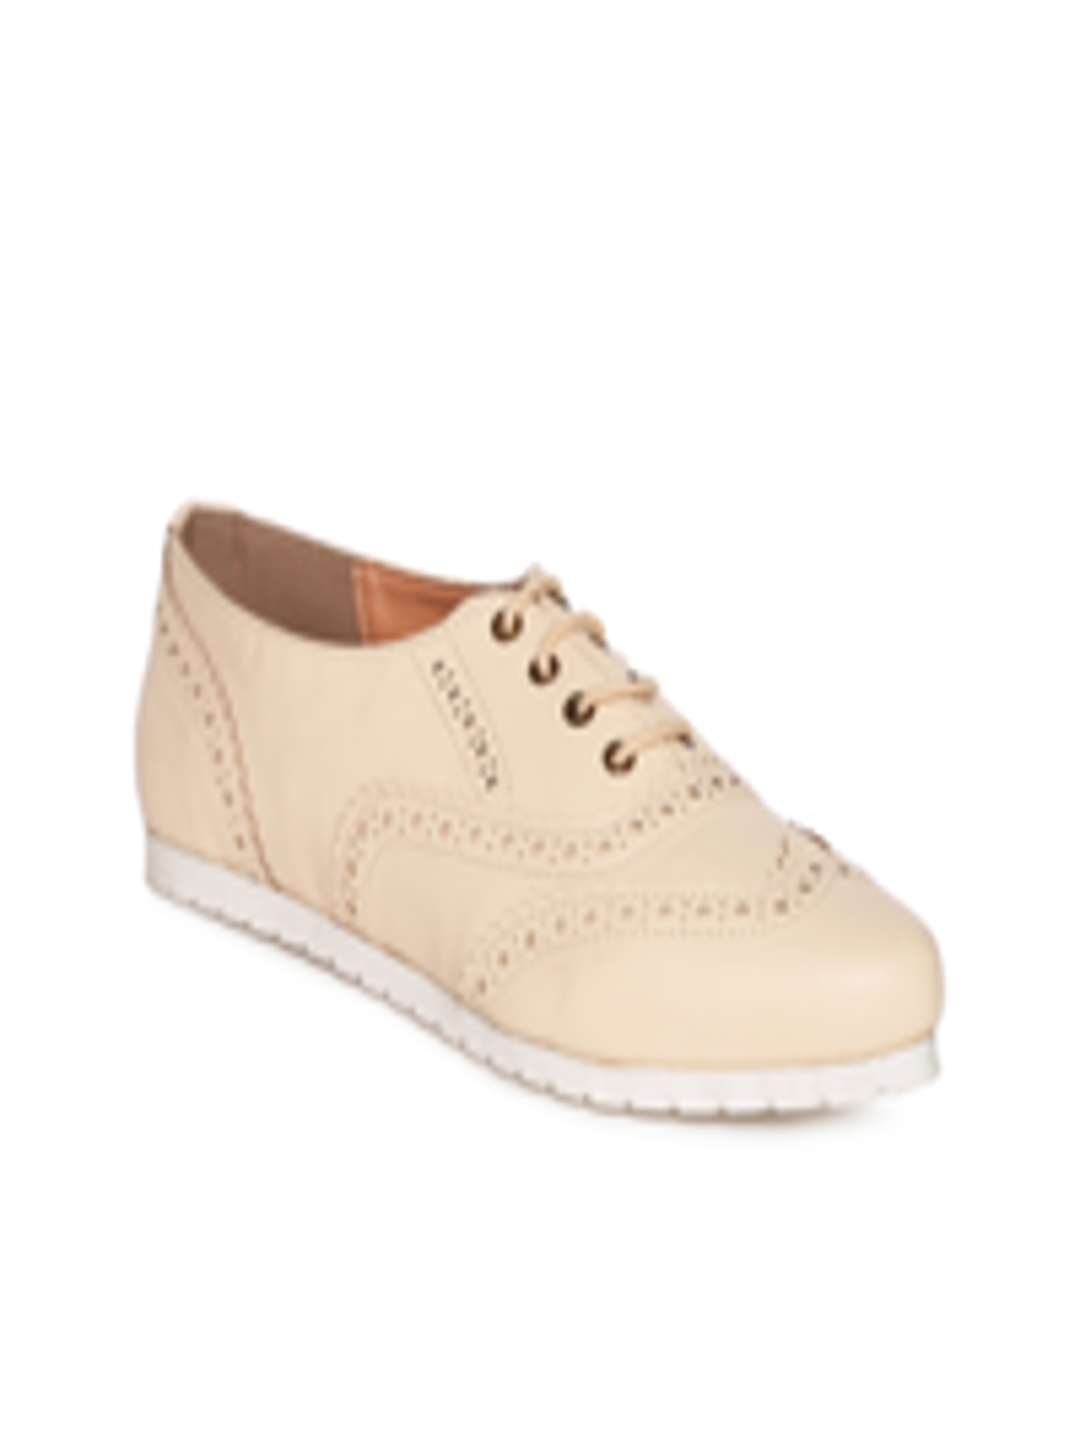 Buy Lavie Women Beige Brogues - Casual Shoes for Women 2167920 | Myntra